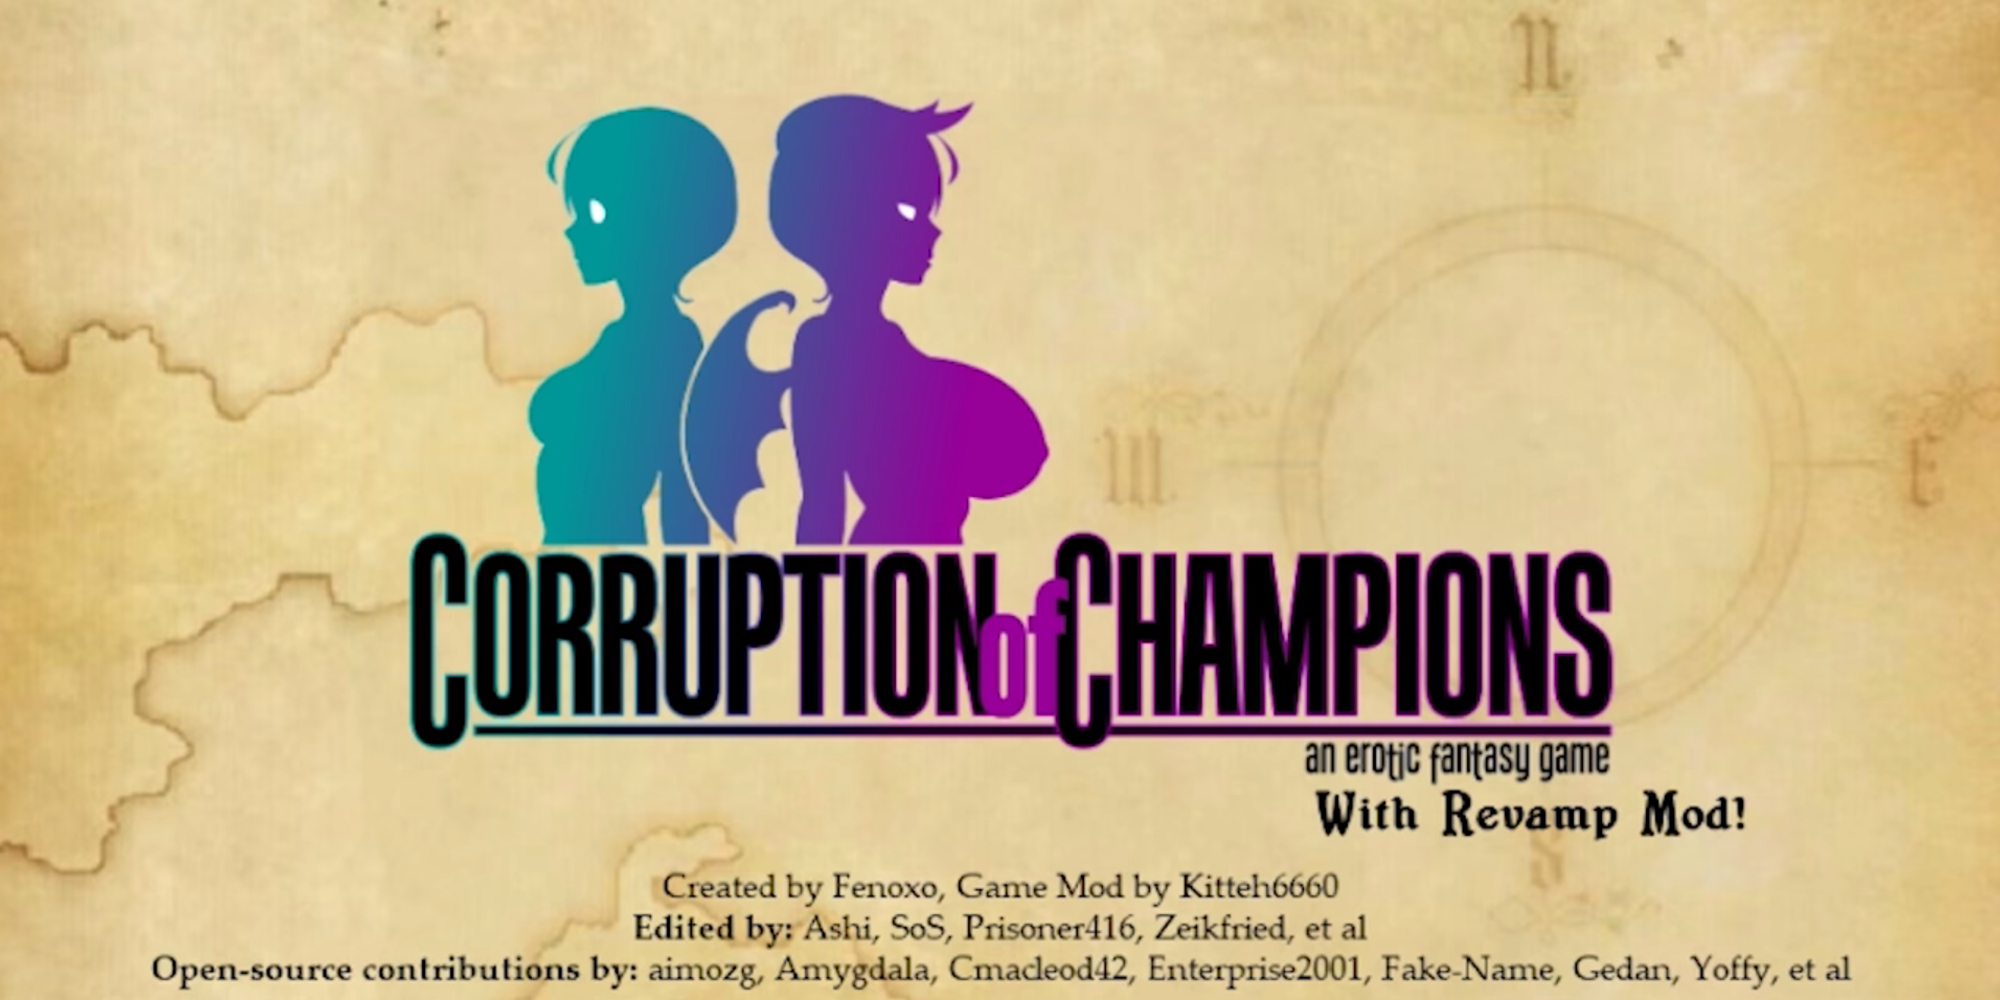 corruptions of champions mod